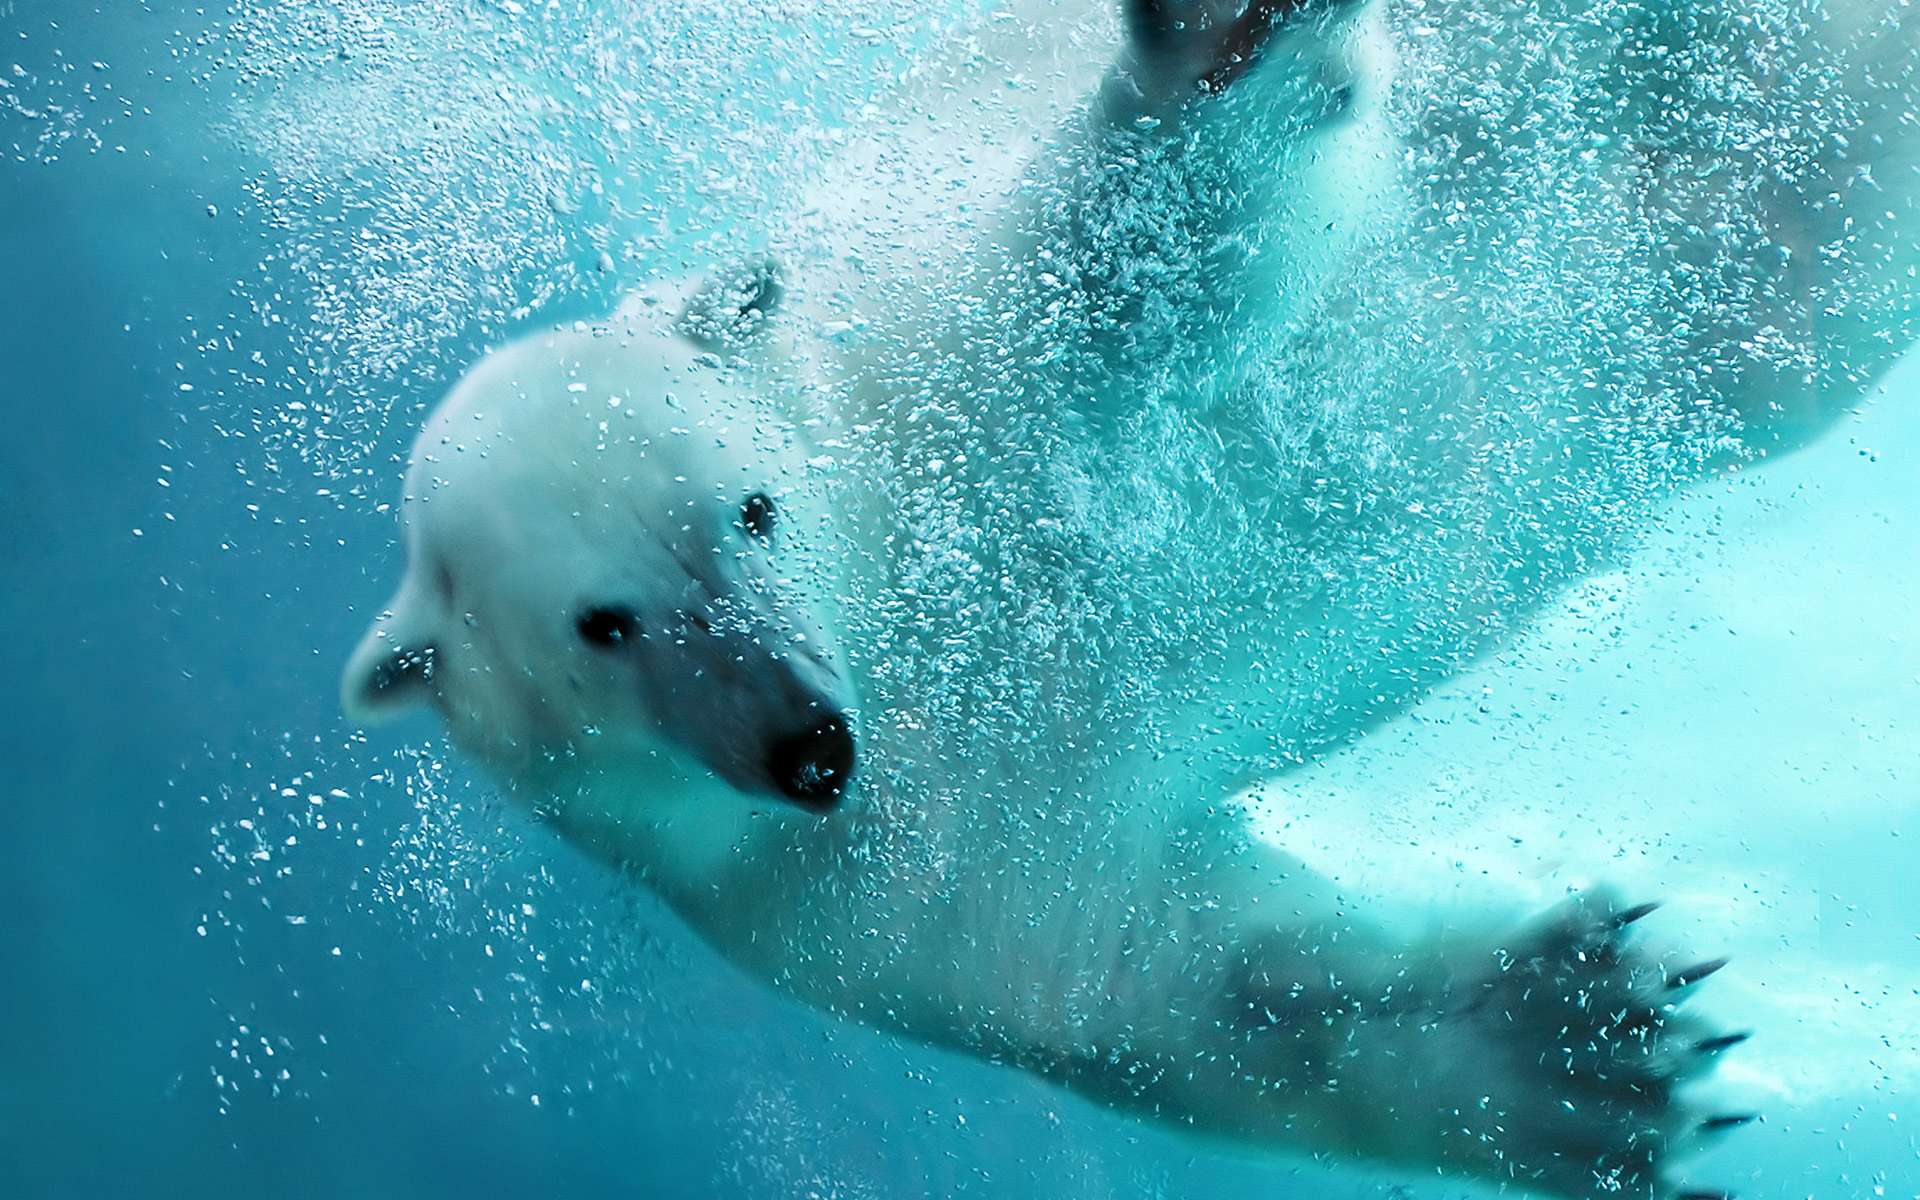 Polar Bear Wallpaper. Polar Bear Background